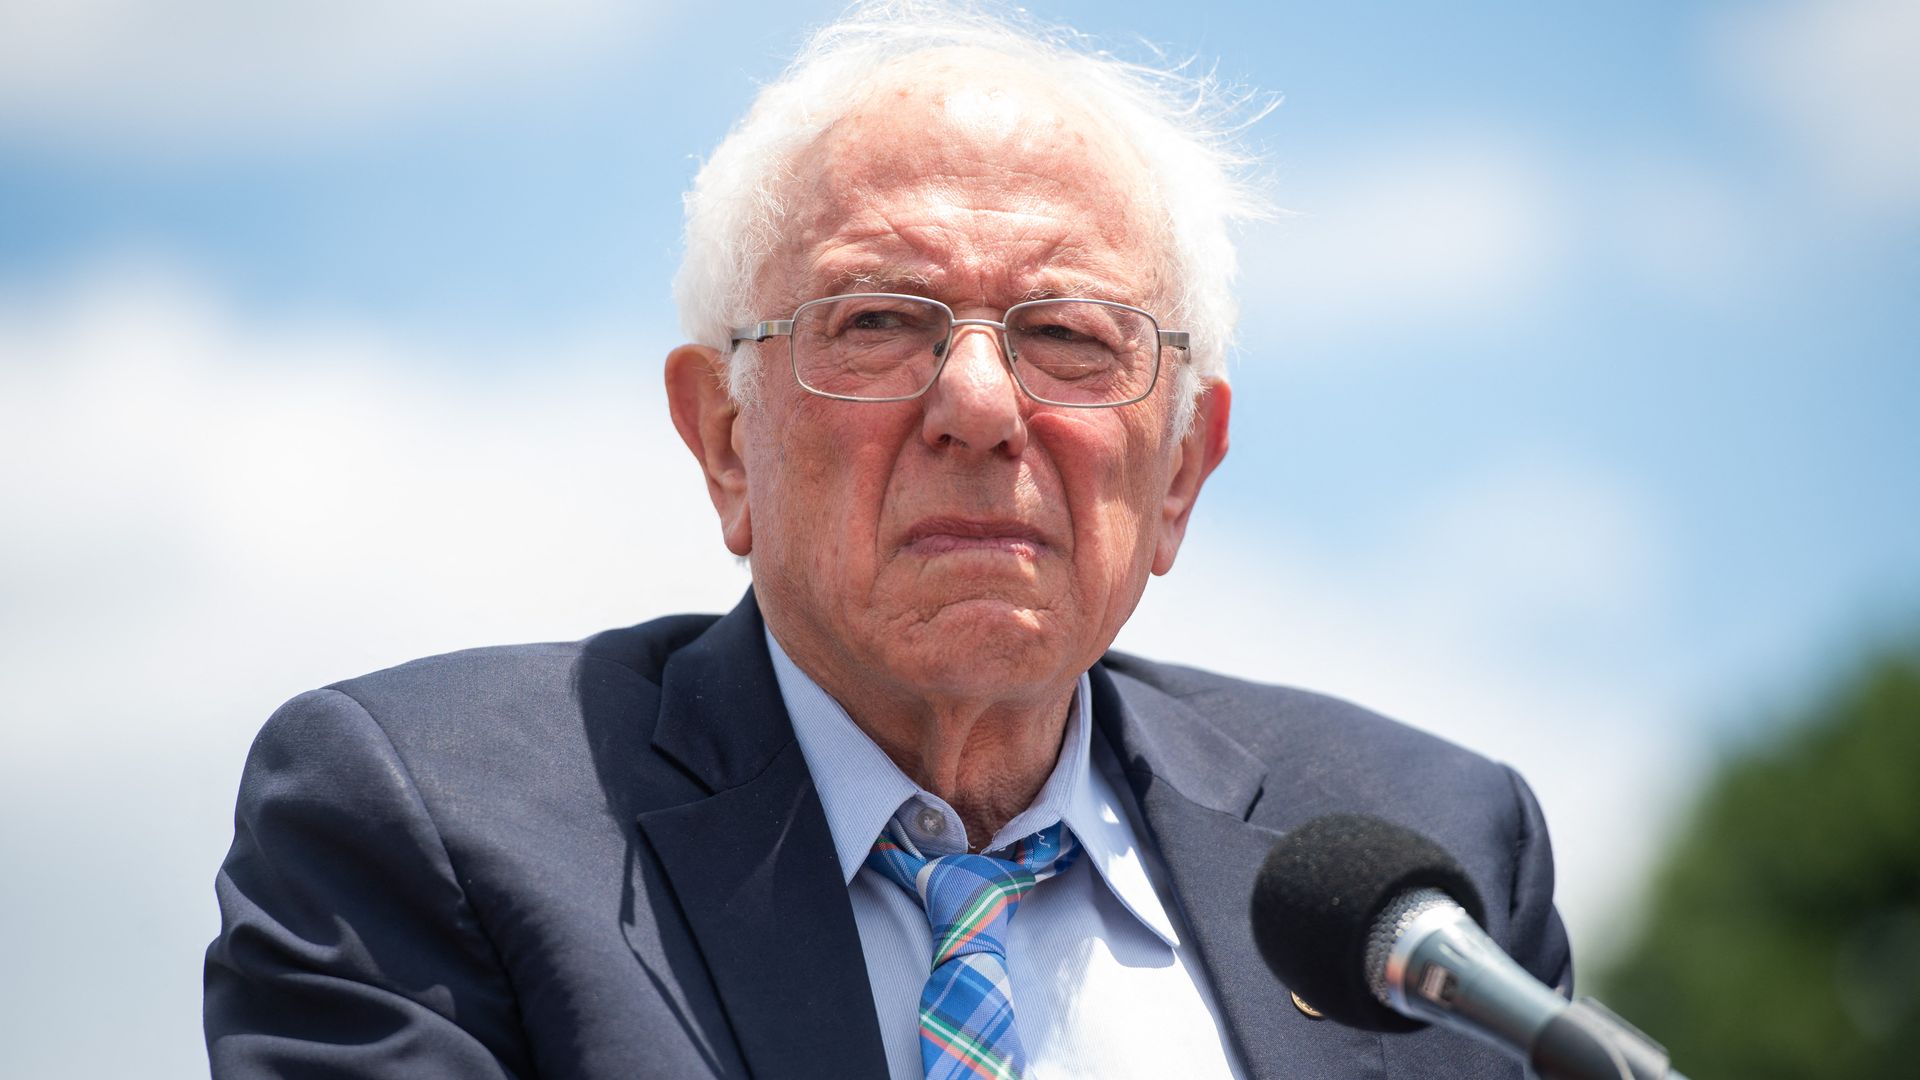 Sen. Bernie Sanders is seen during an outdoor rally in Washington.